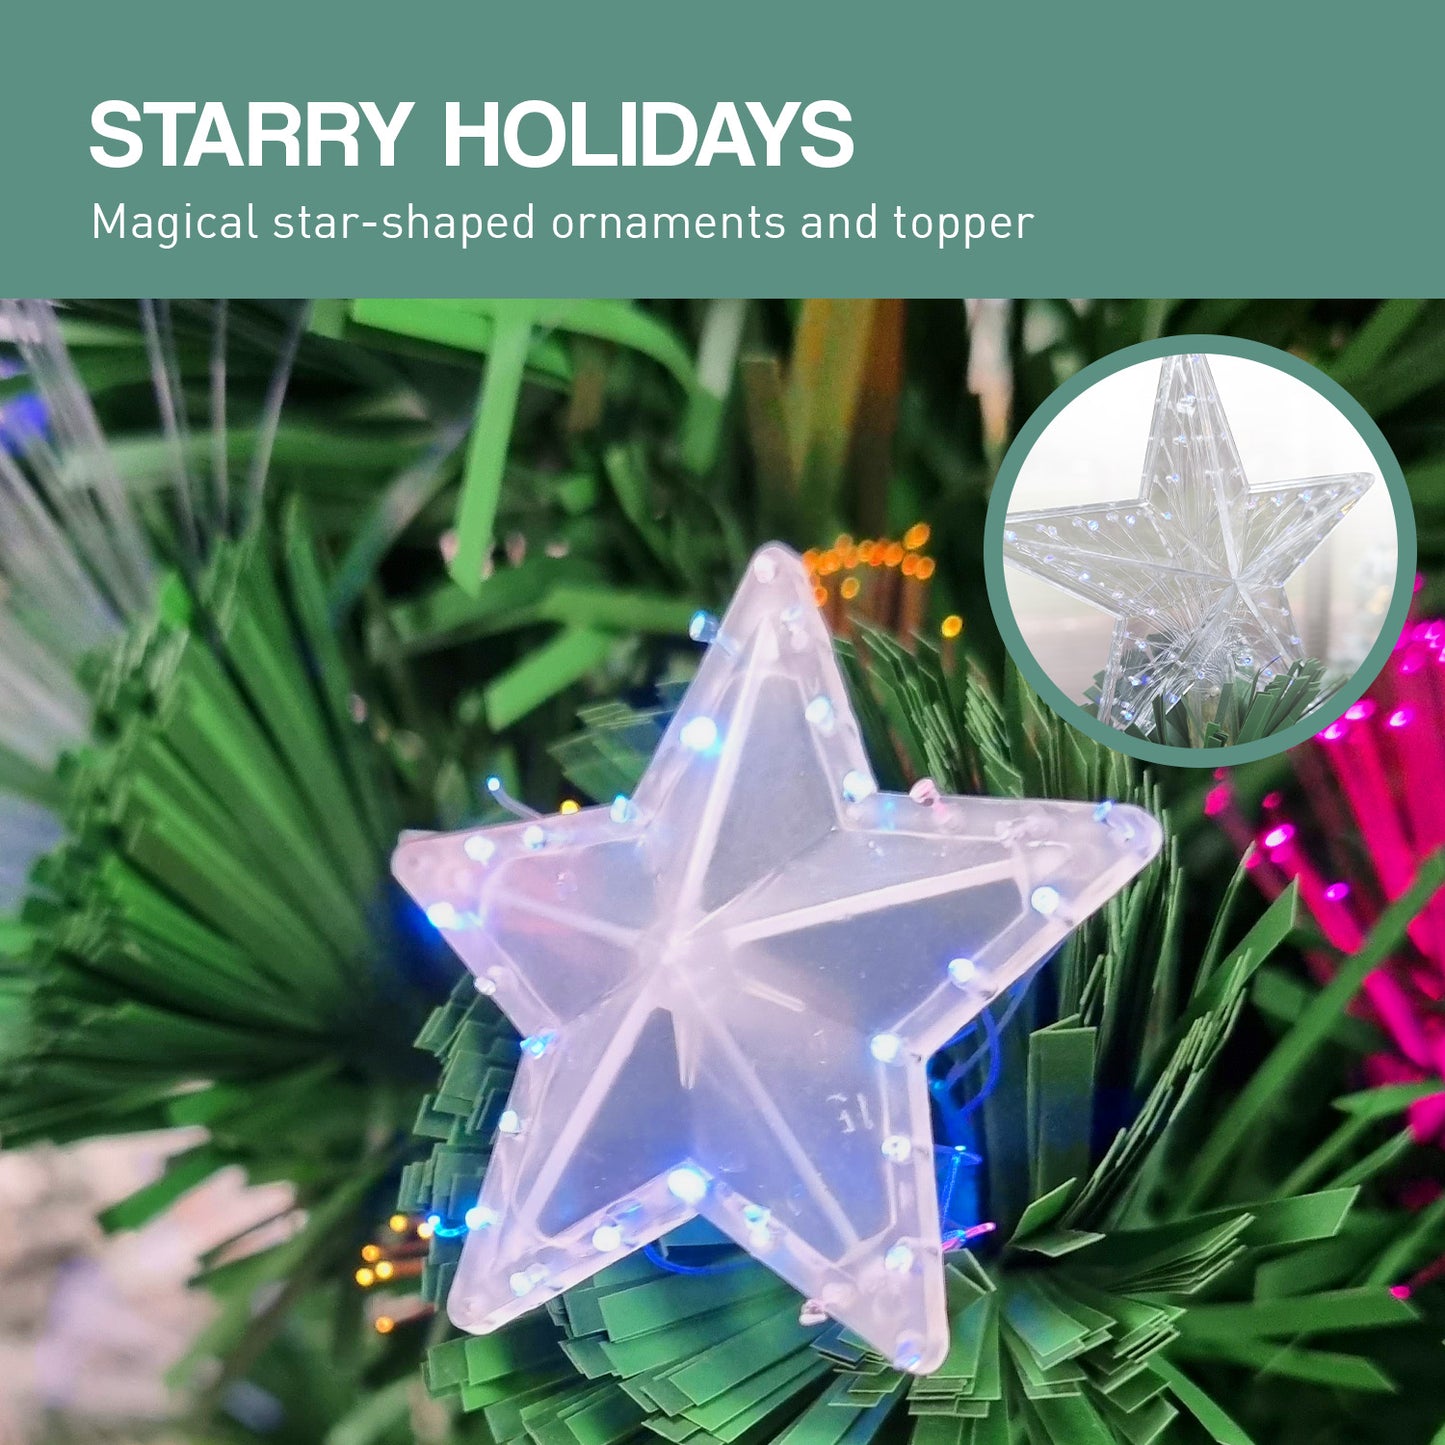 8ft 2.4m 320 Tips Enchanted Pre Lit Fibre Optic Christmas Tree Stars Xmas Decor